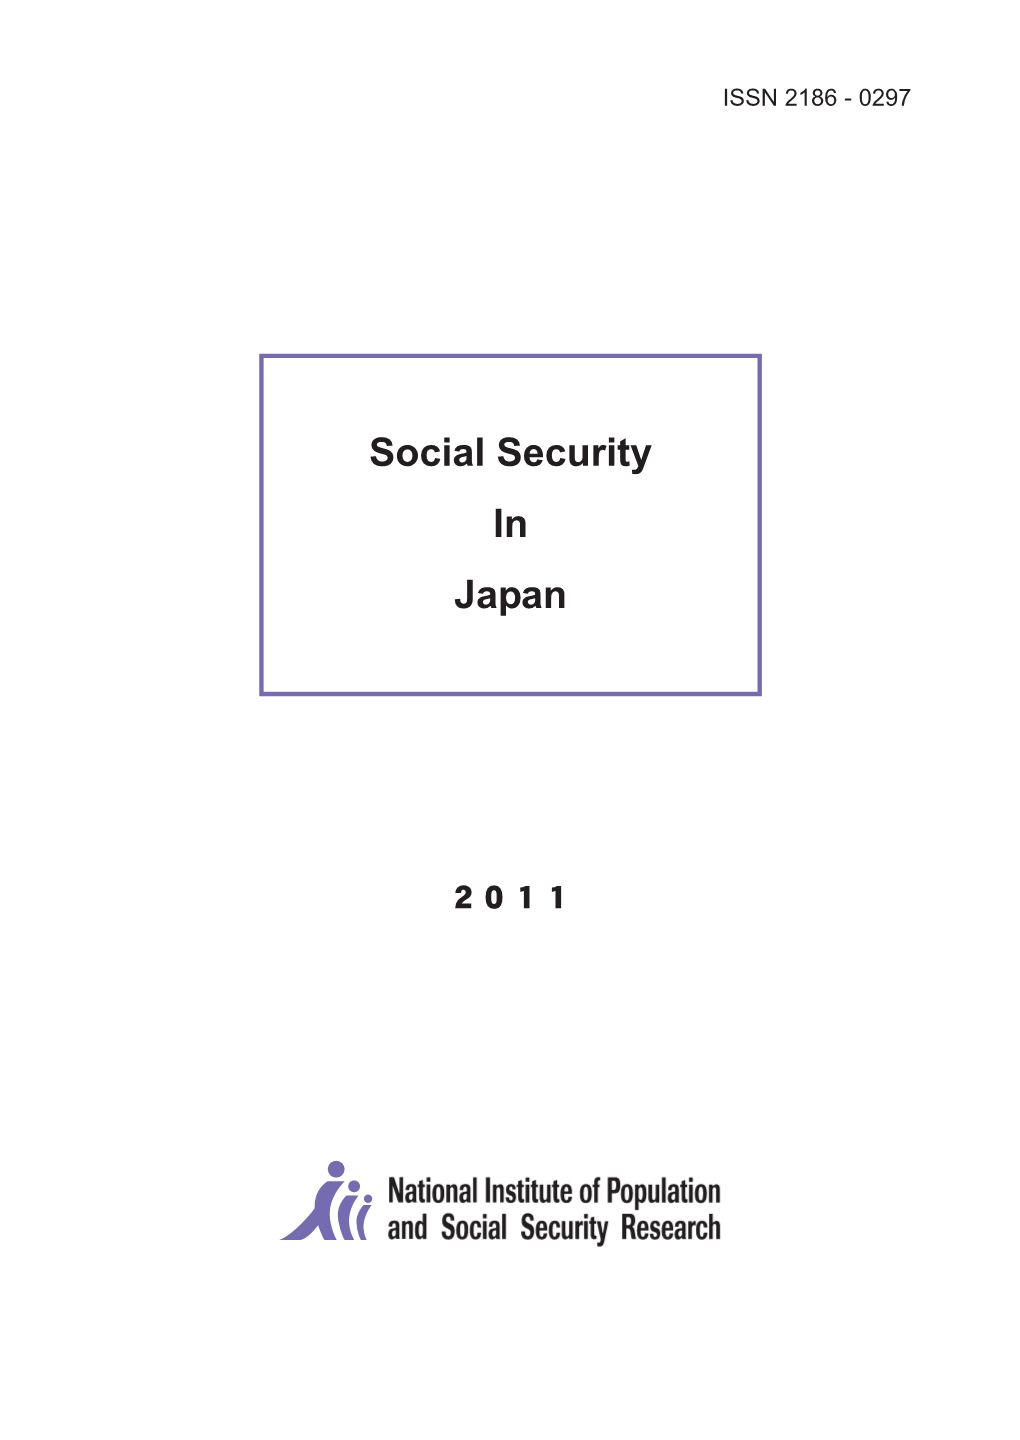 Social Security in Japan 2011